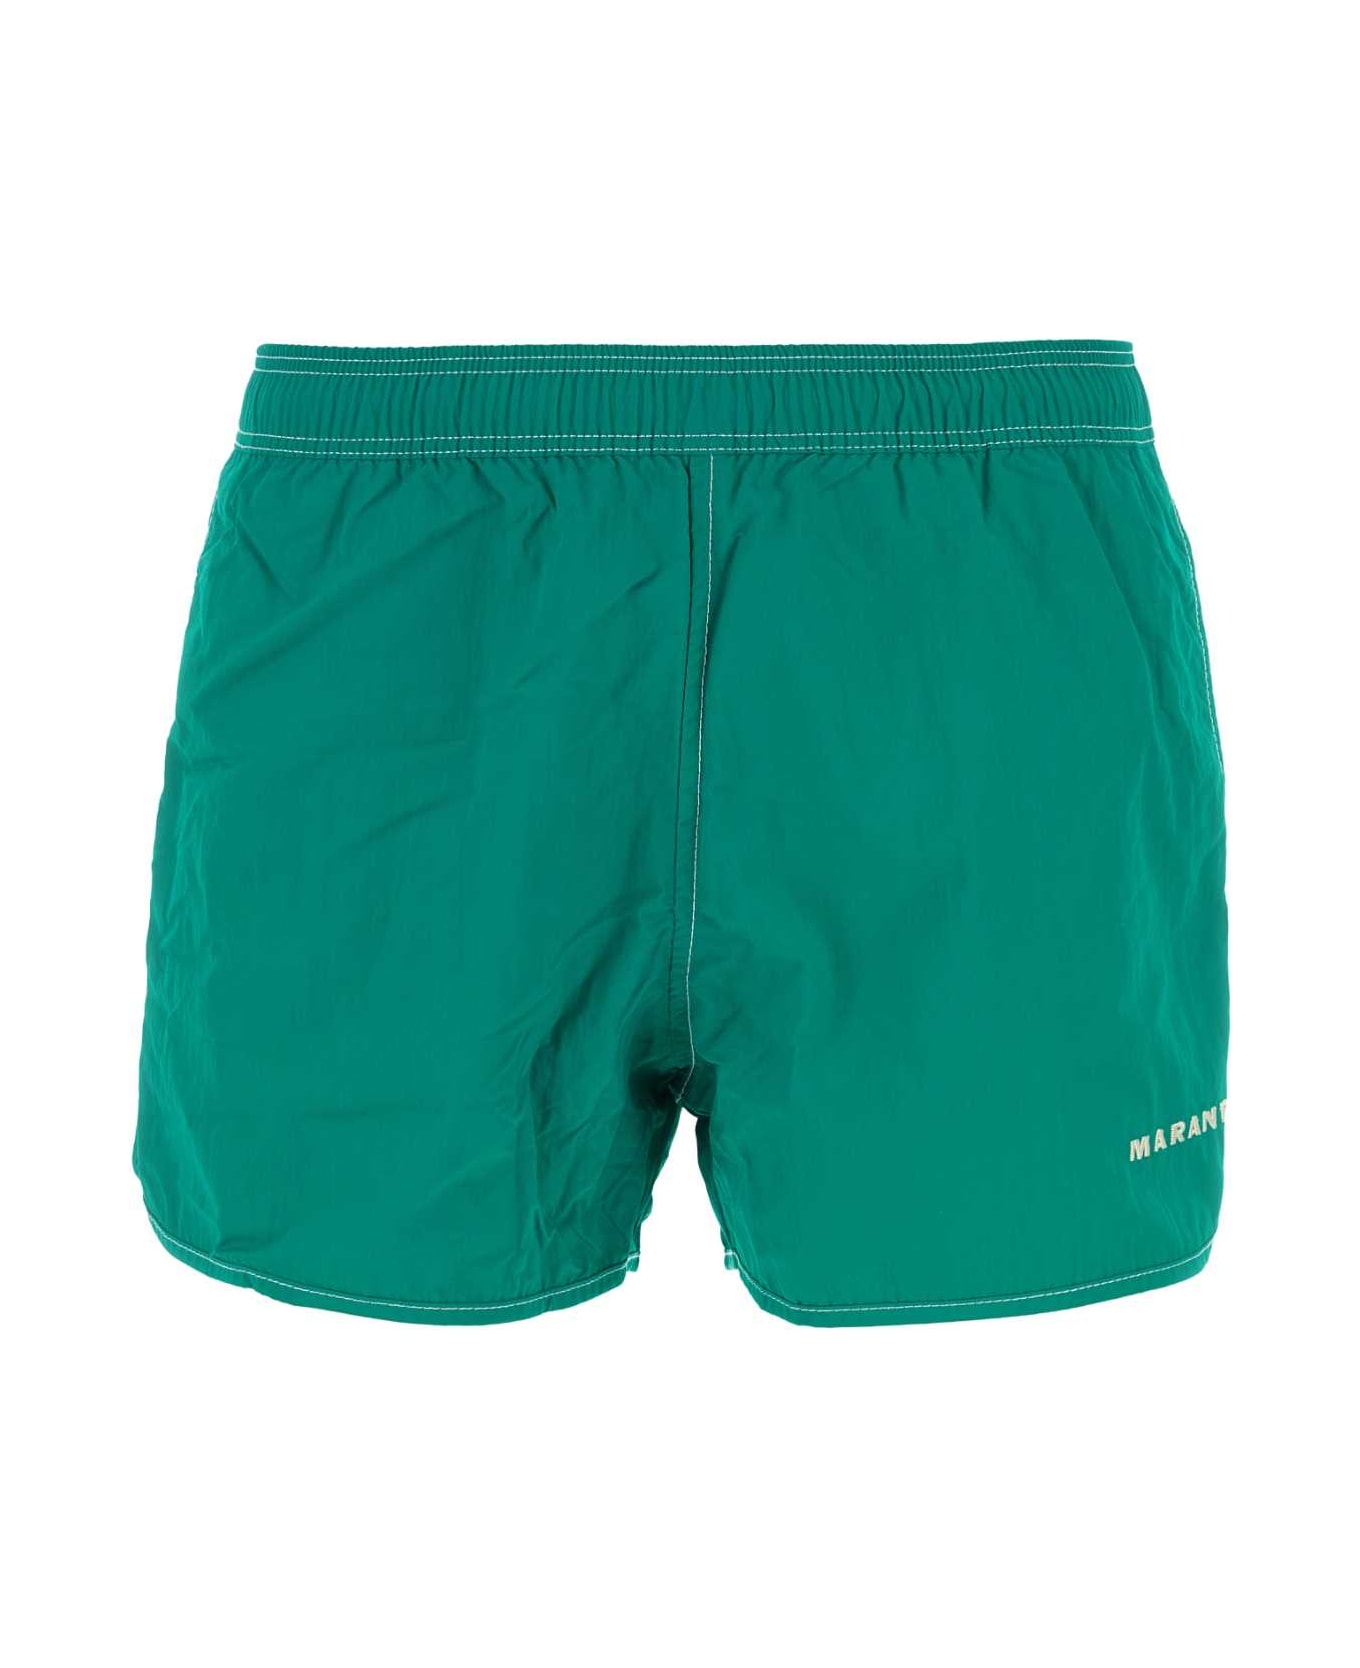 Isabel Marant Emerald Green Nylon Vicente Swimming Shorts - EMERALD